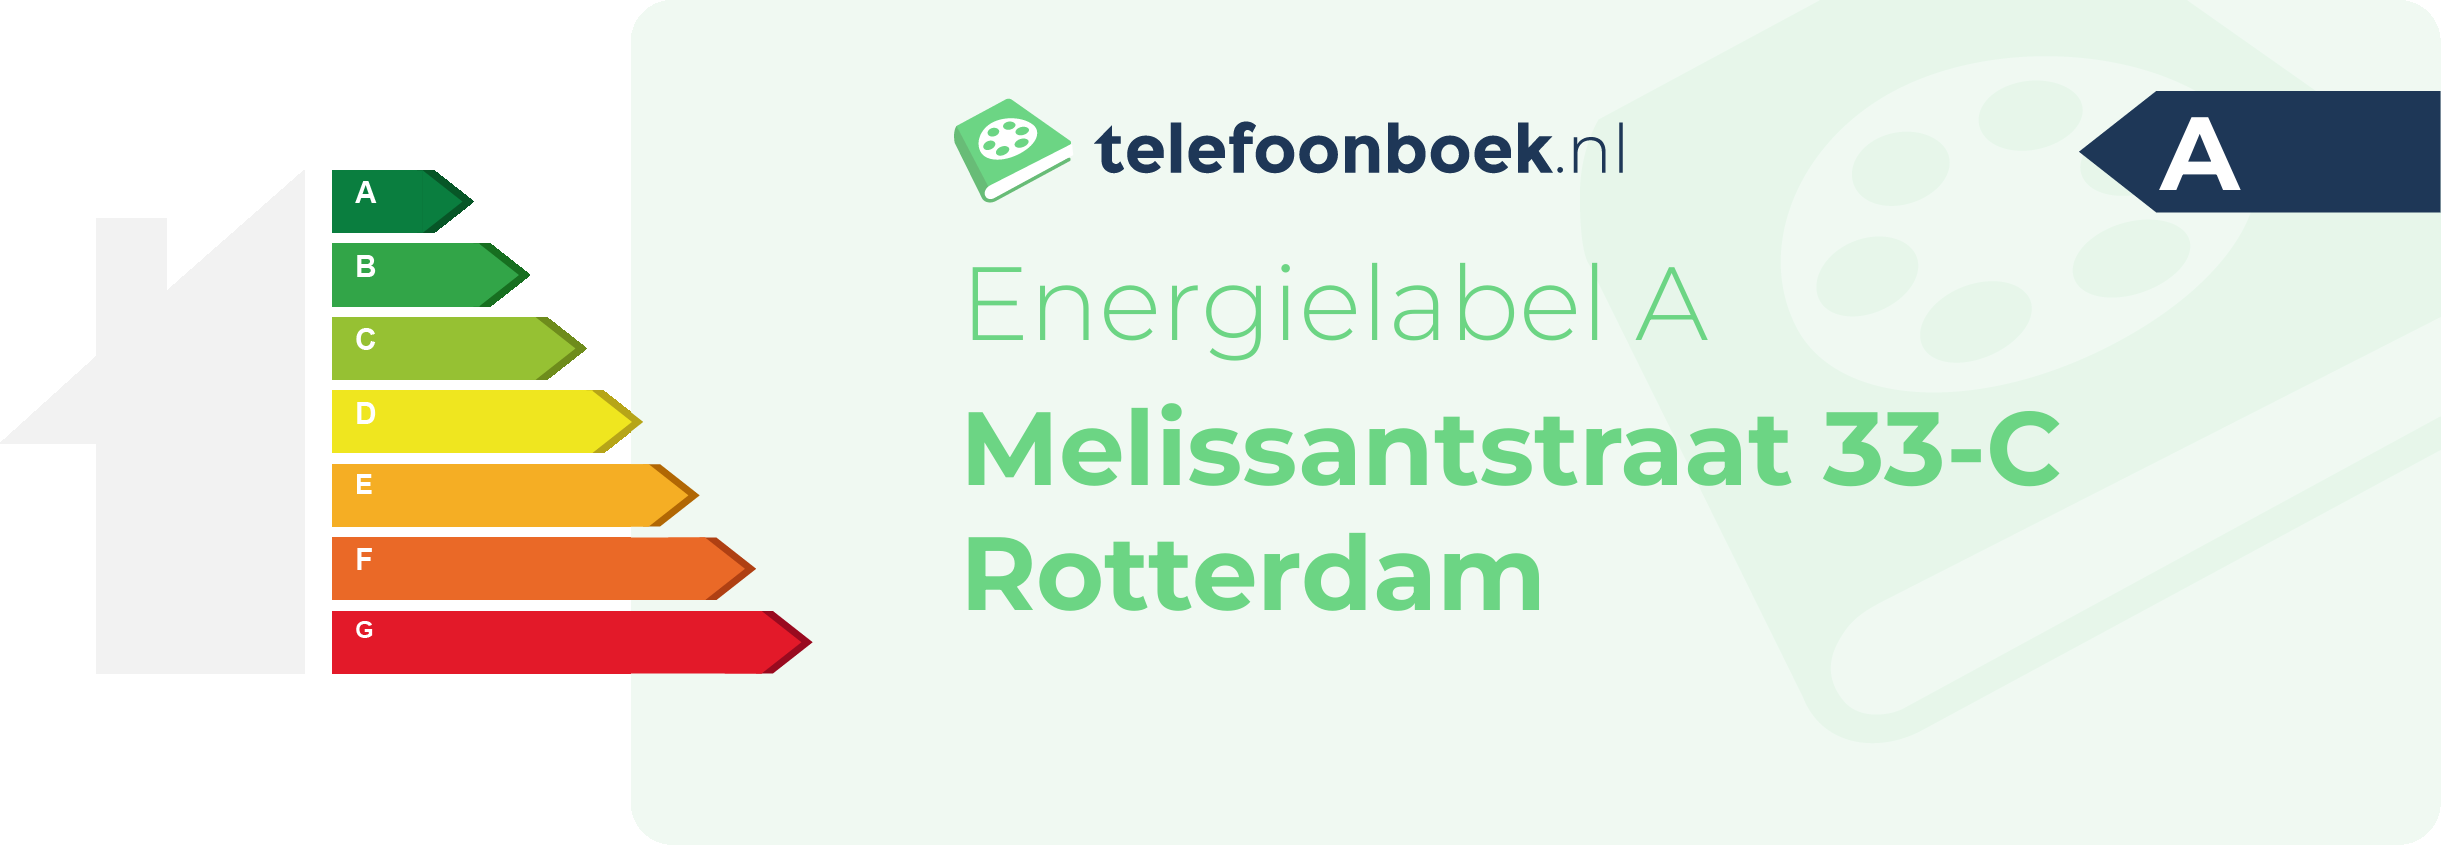 Energielabel Melissantstraat 33-C Rotterdam